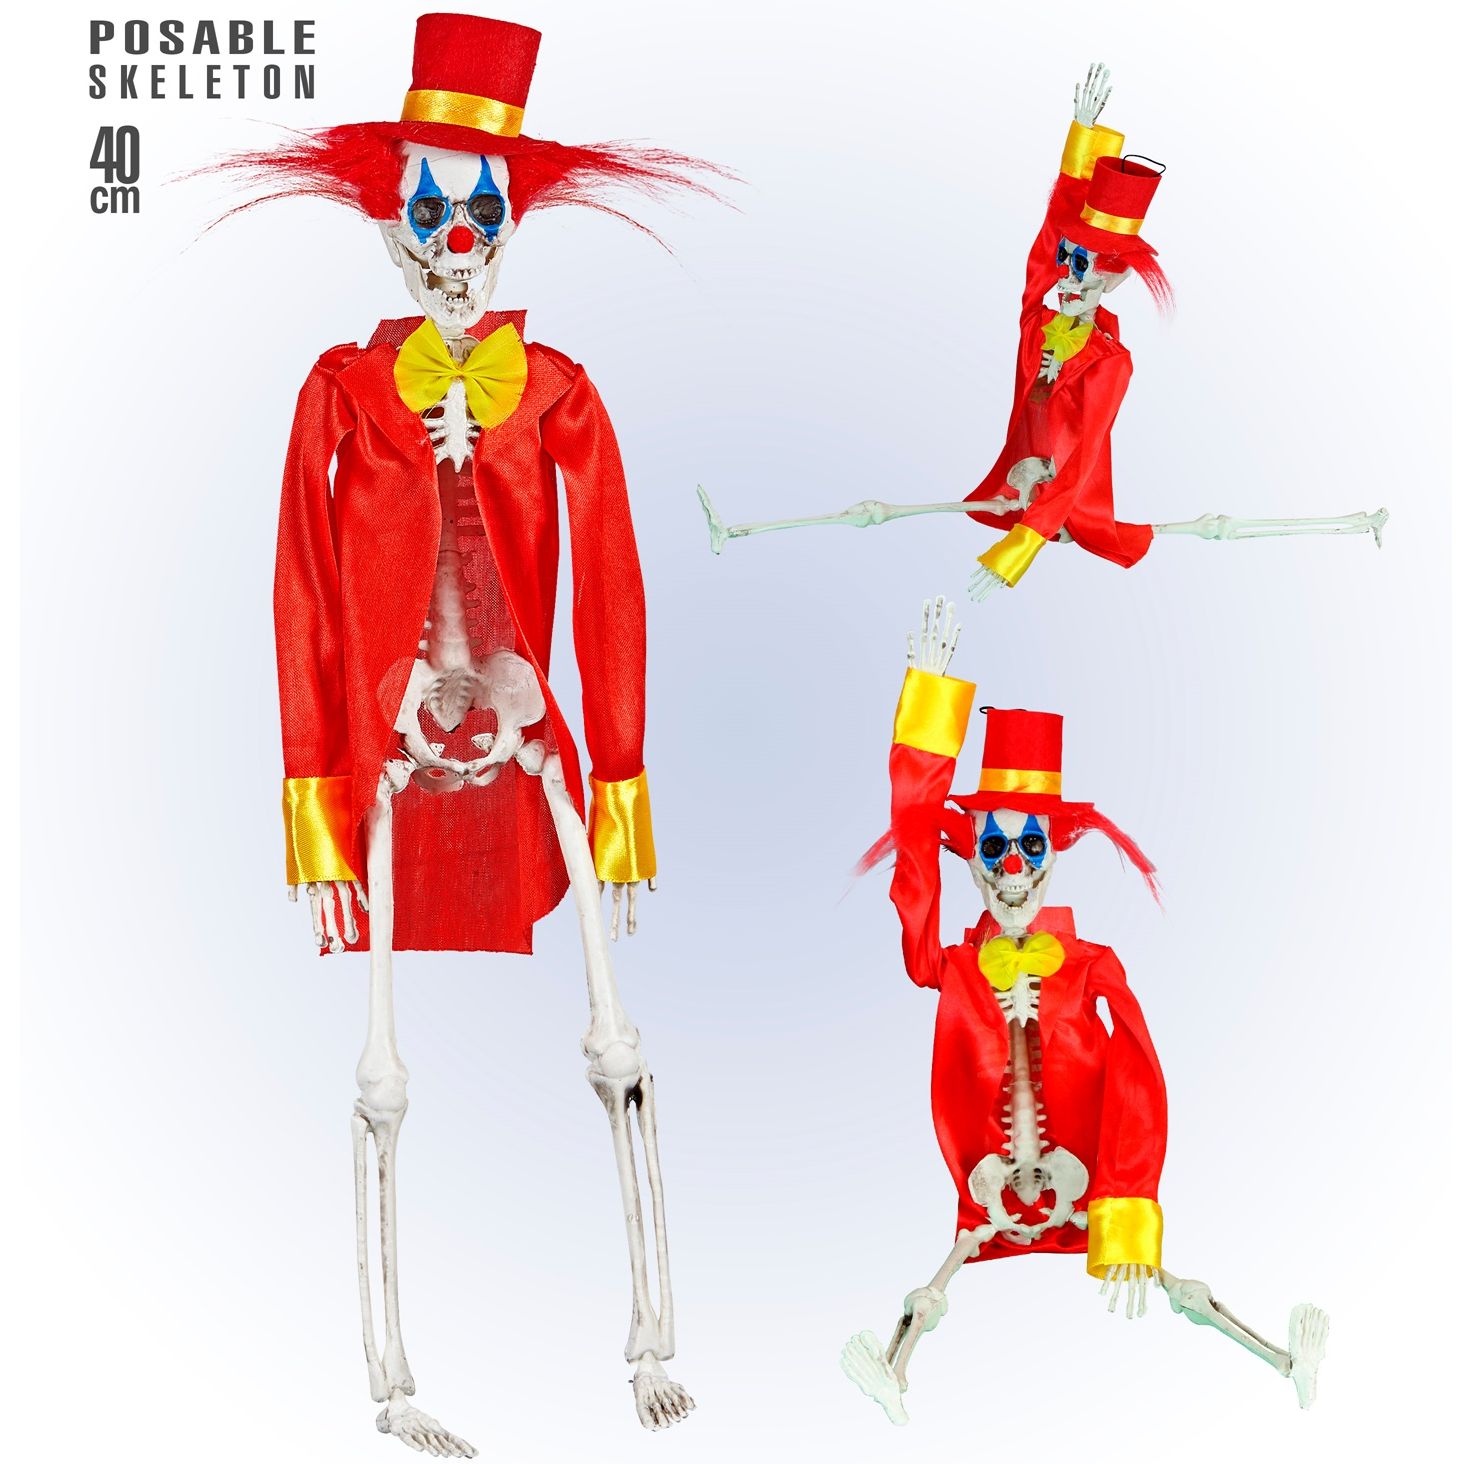 Poseerbare clown skelet halloween 40cm